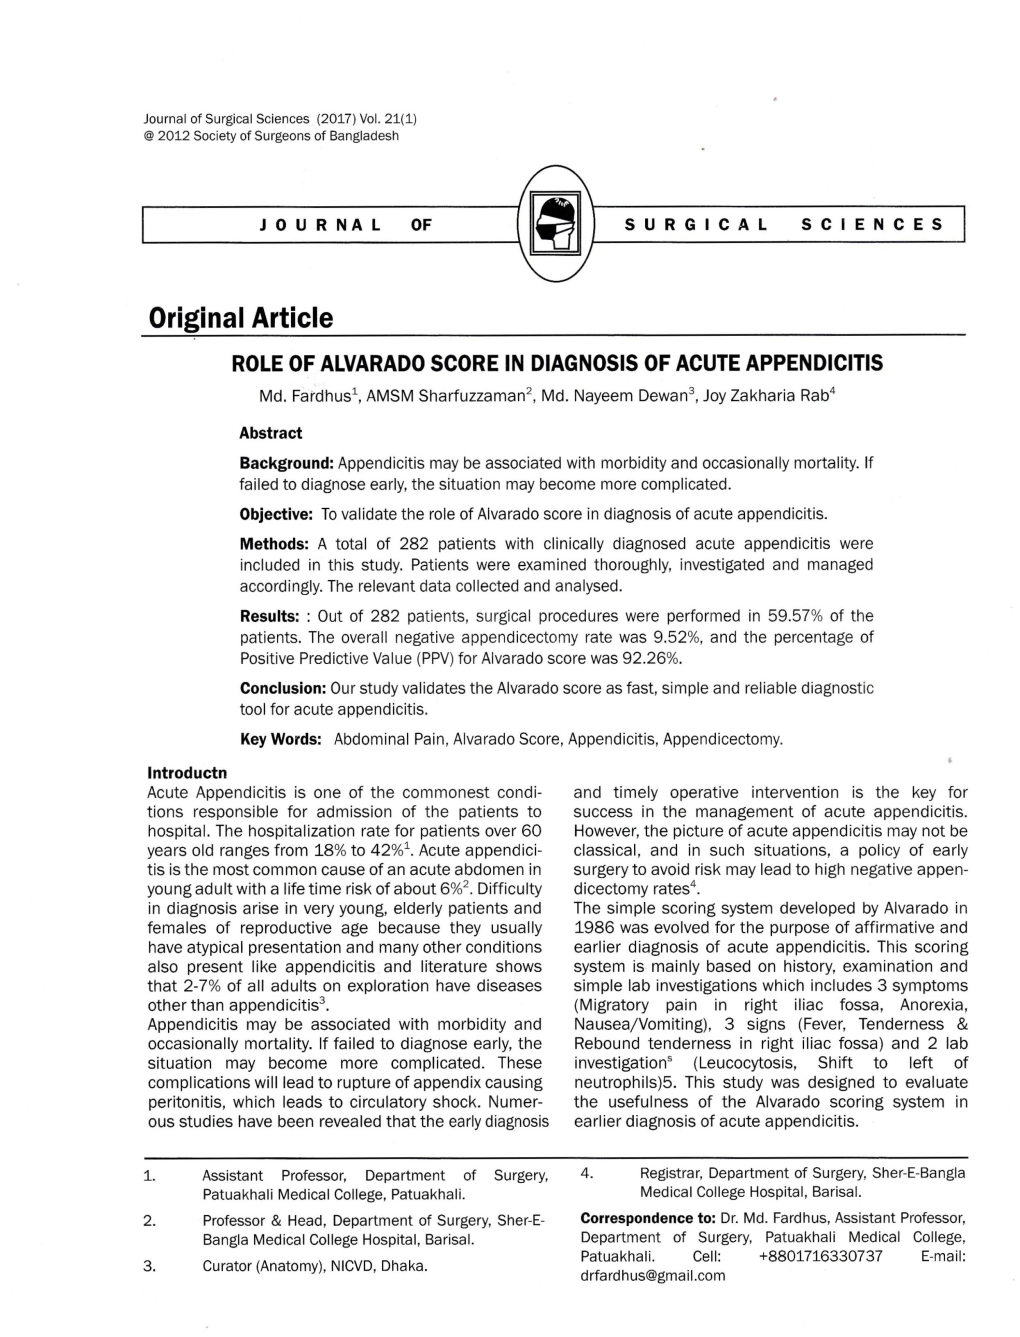 Role of Alvarado Score in Diagnosis of Acute Appendicitis